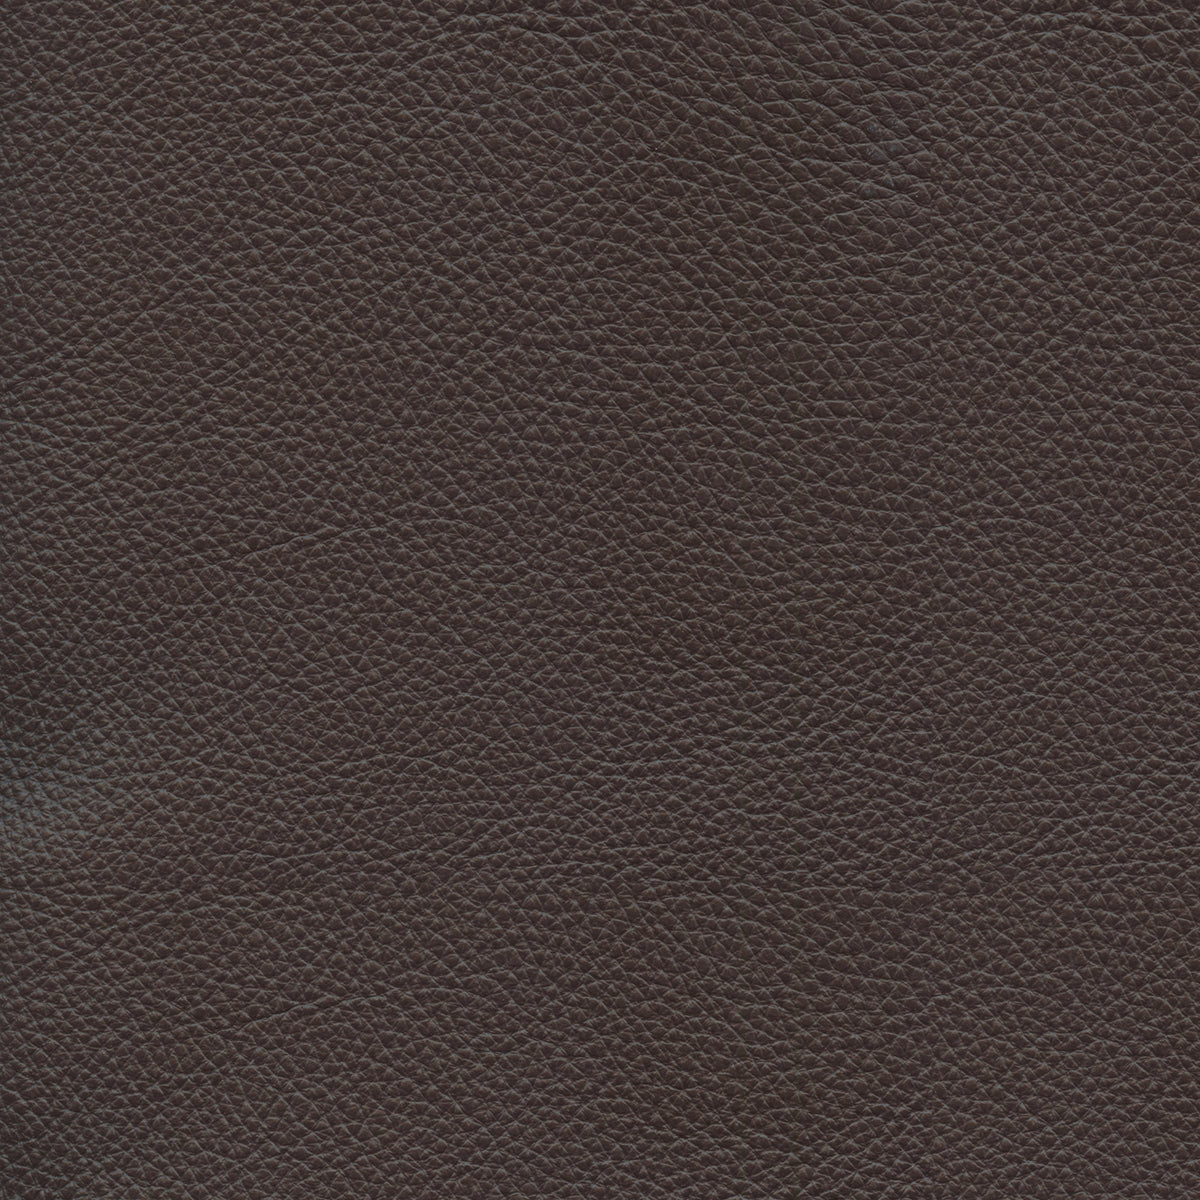 Hazel-Leather Lx5009 Cocoa